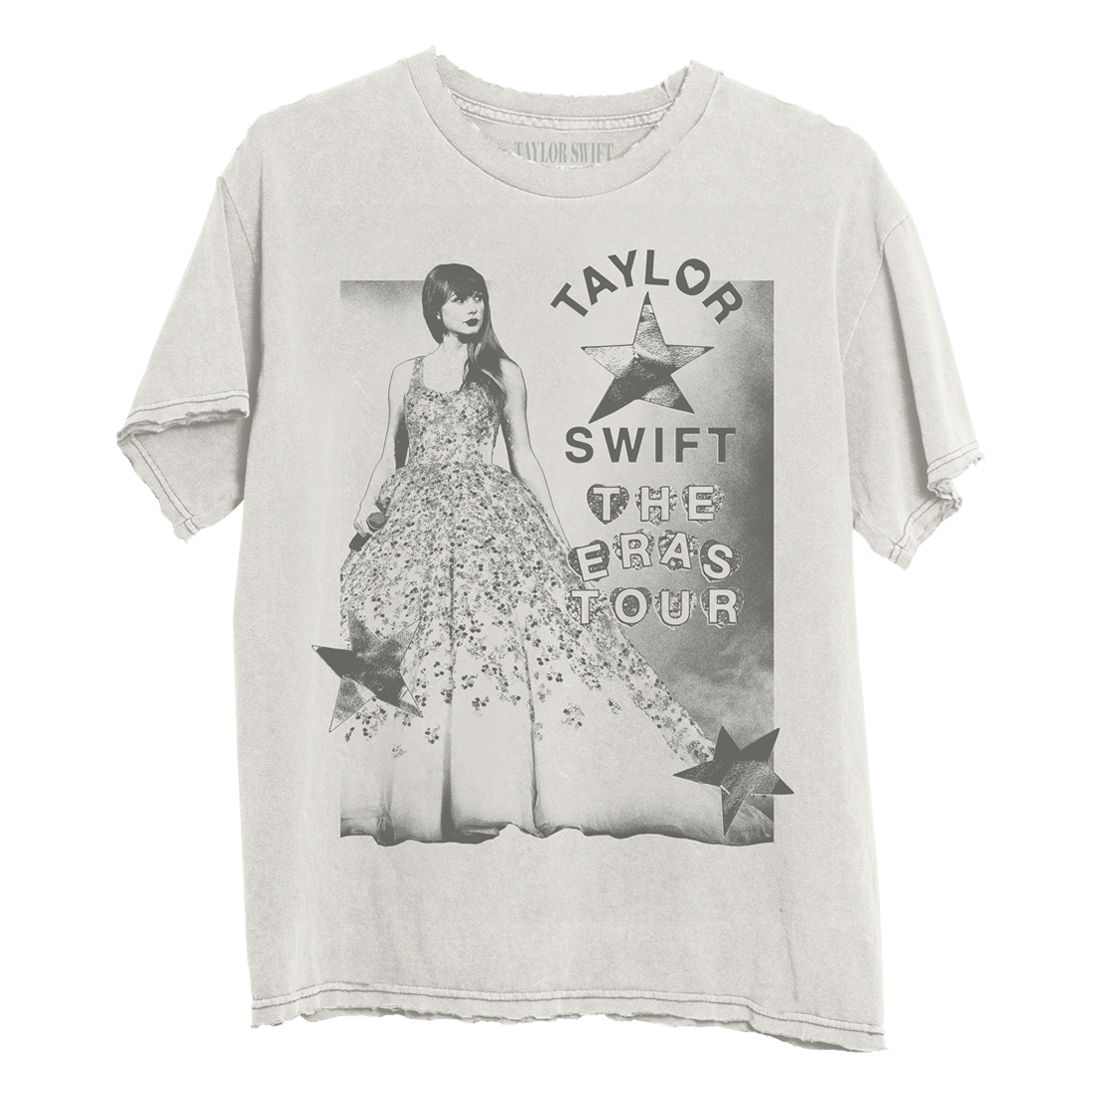 Taylor Swift - Taylor Swift The Eras Tour Photo Oversized T-Shirt